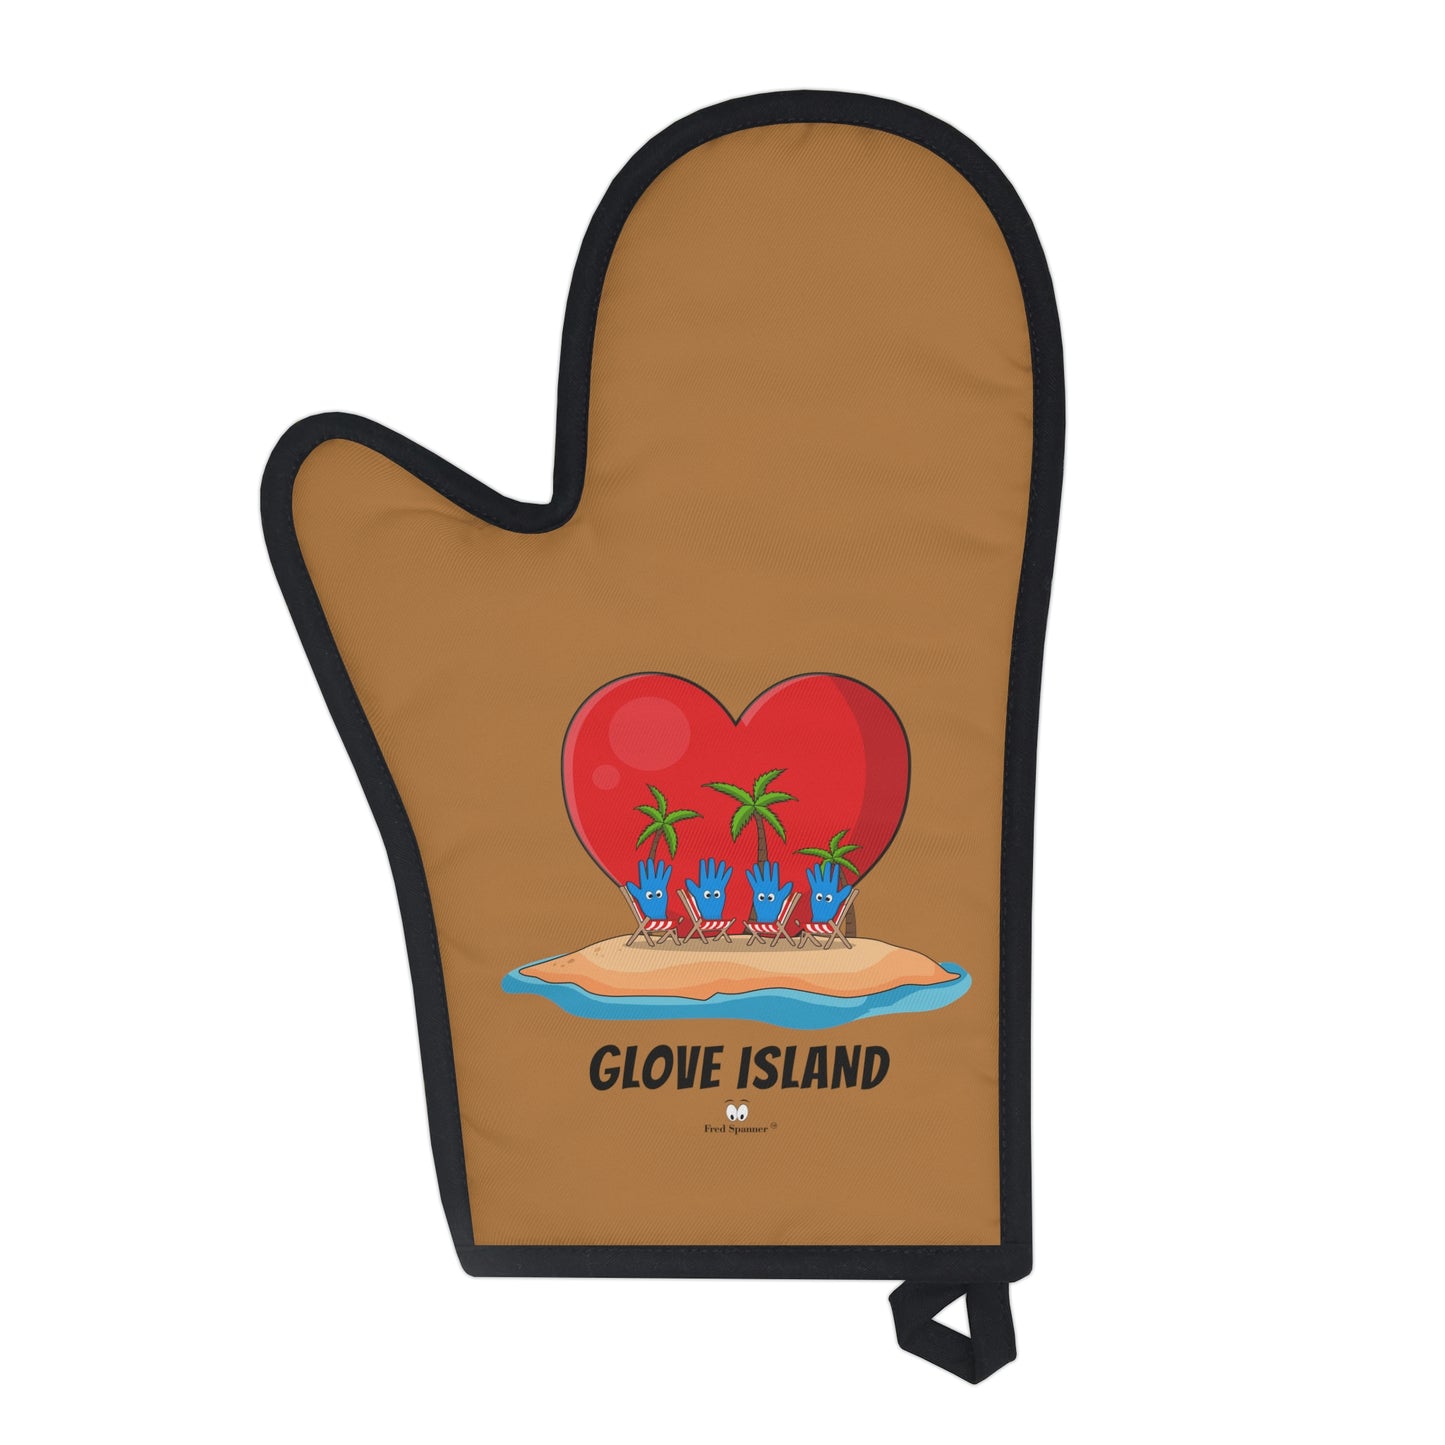 Glove Island- Oven Glove